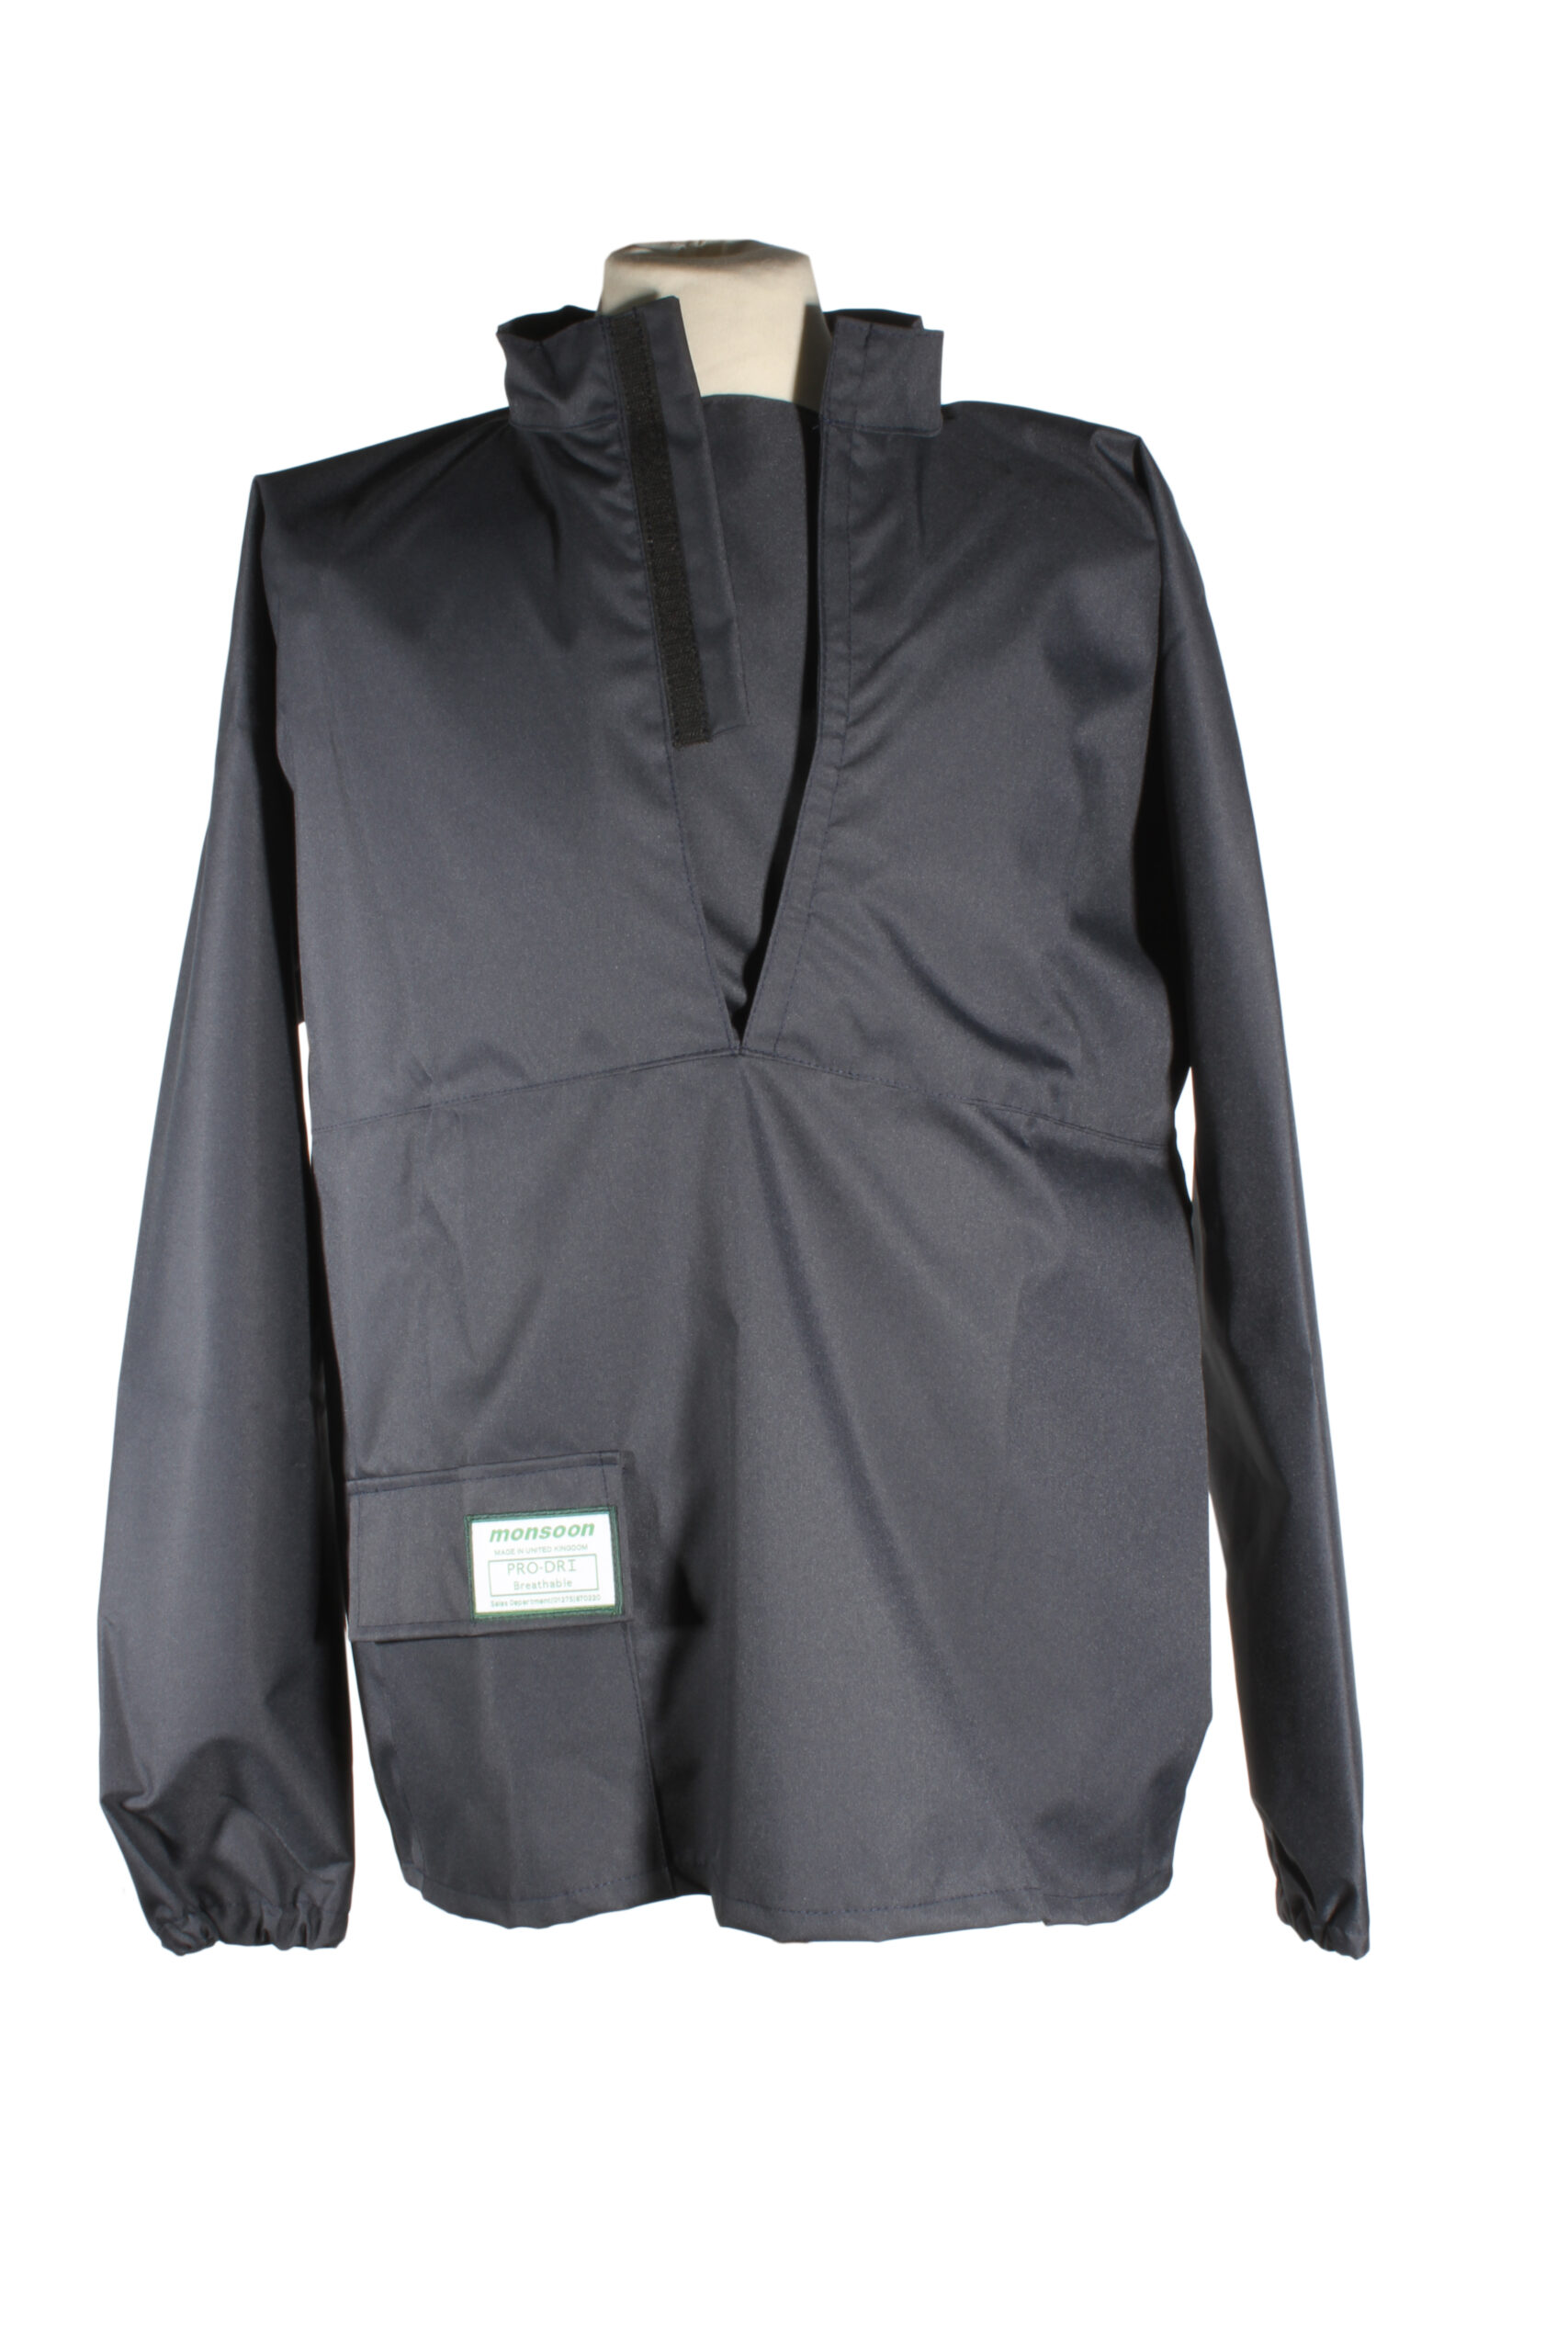 Monsoon Pro Dri Parlour Jacket Navy Long Sleeve - Agri Vet Store